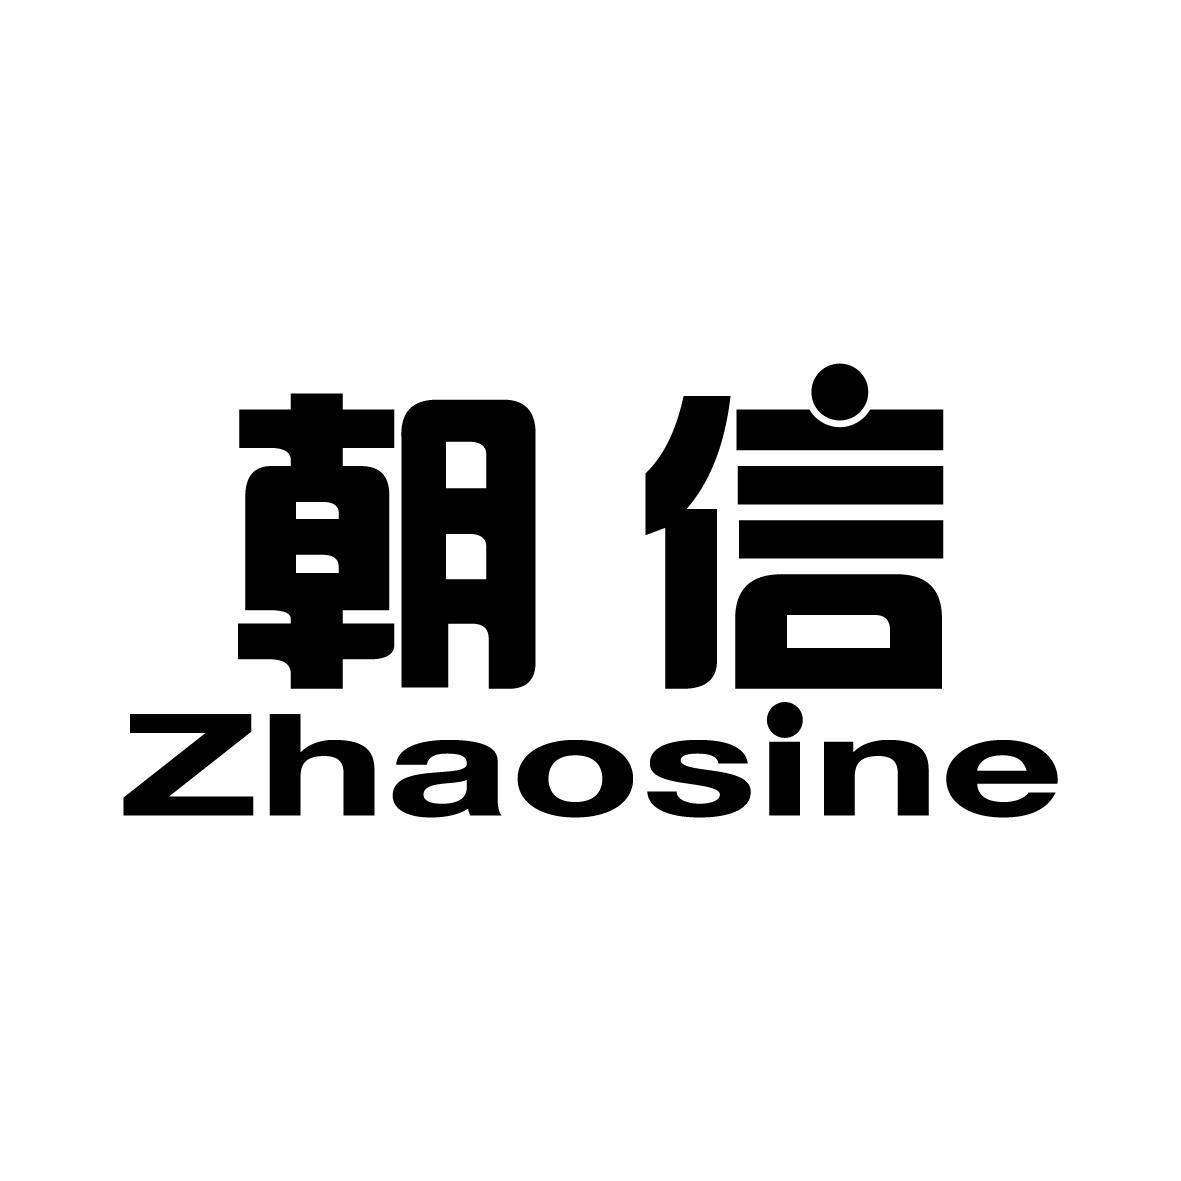 朝信 ZHAOSINE